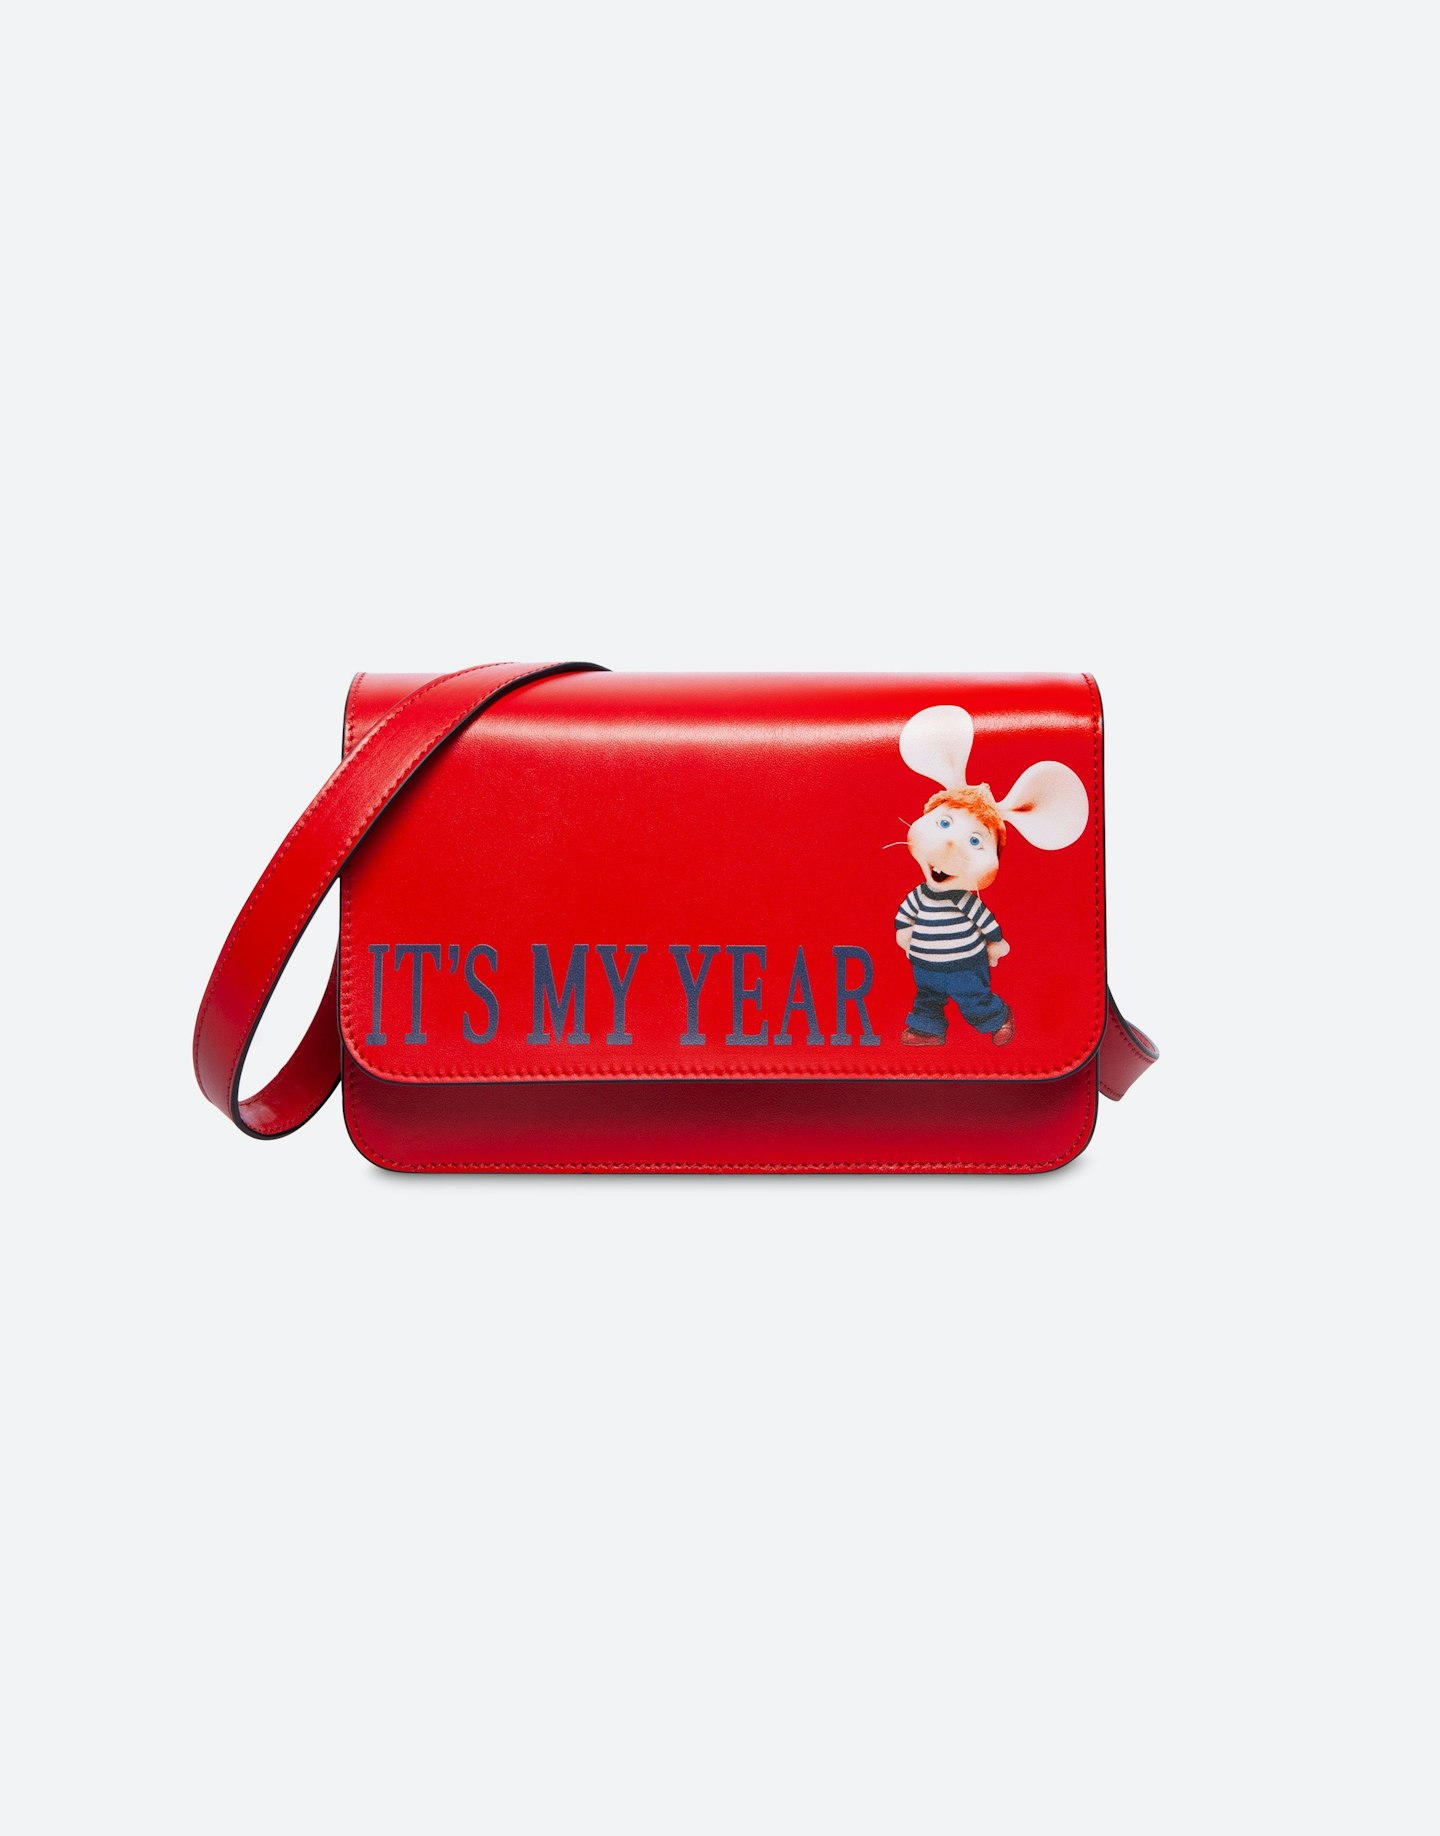 Alberta Ferretti, It's My Year red bag, £435